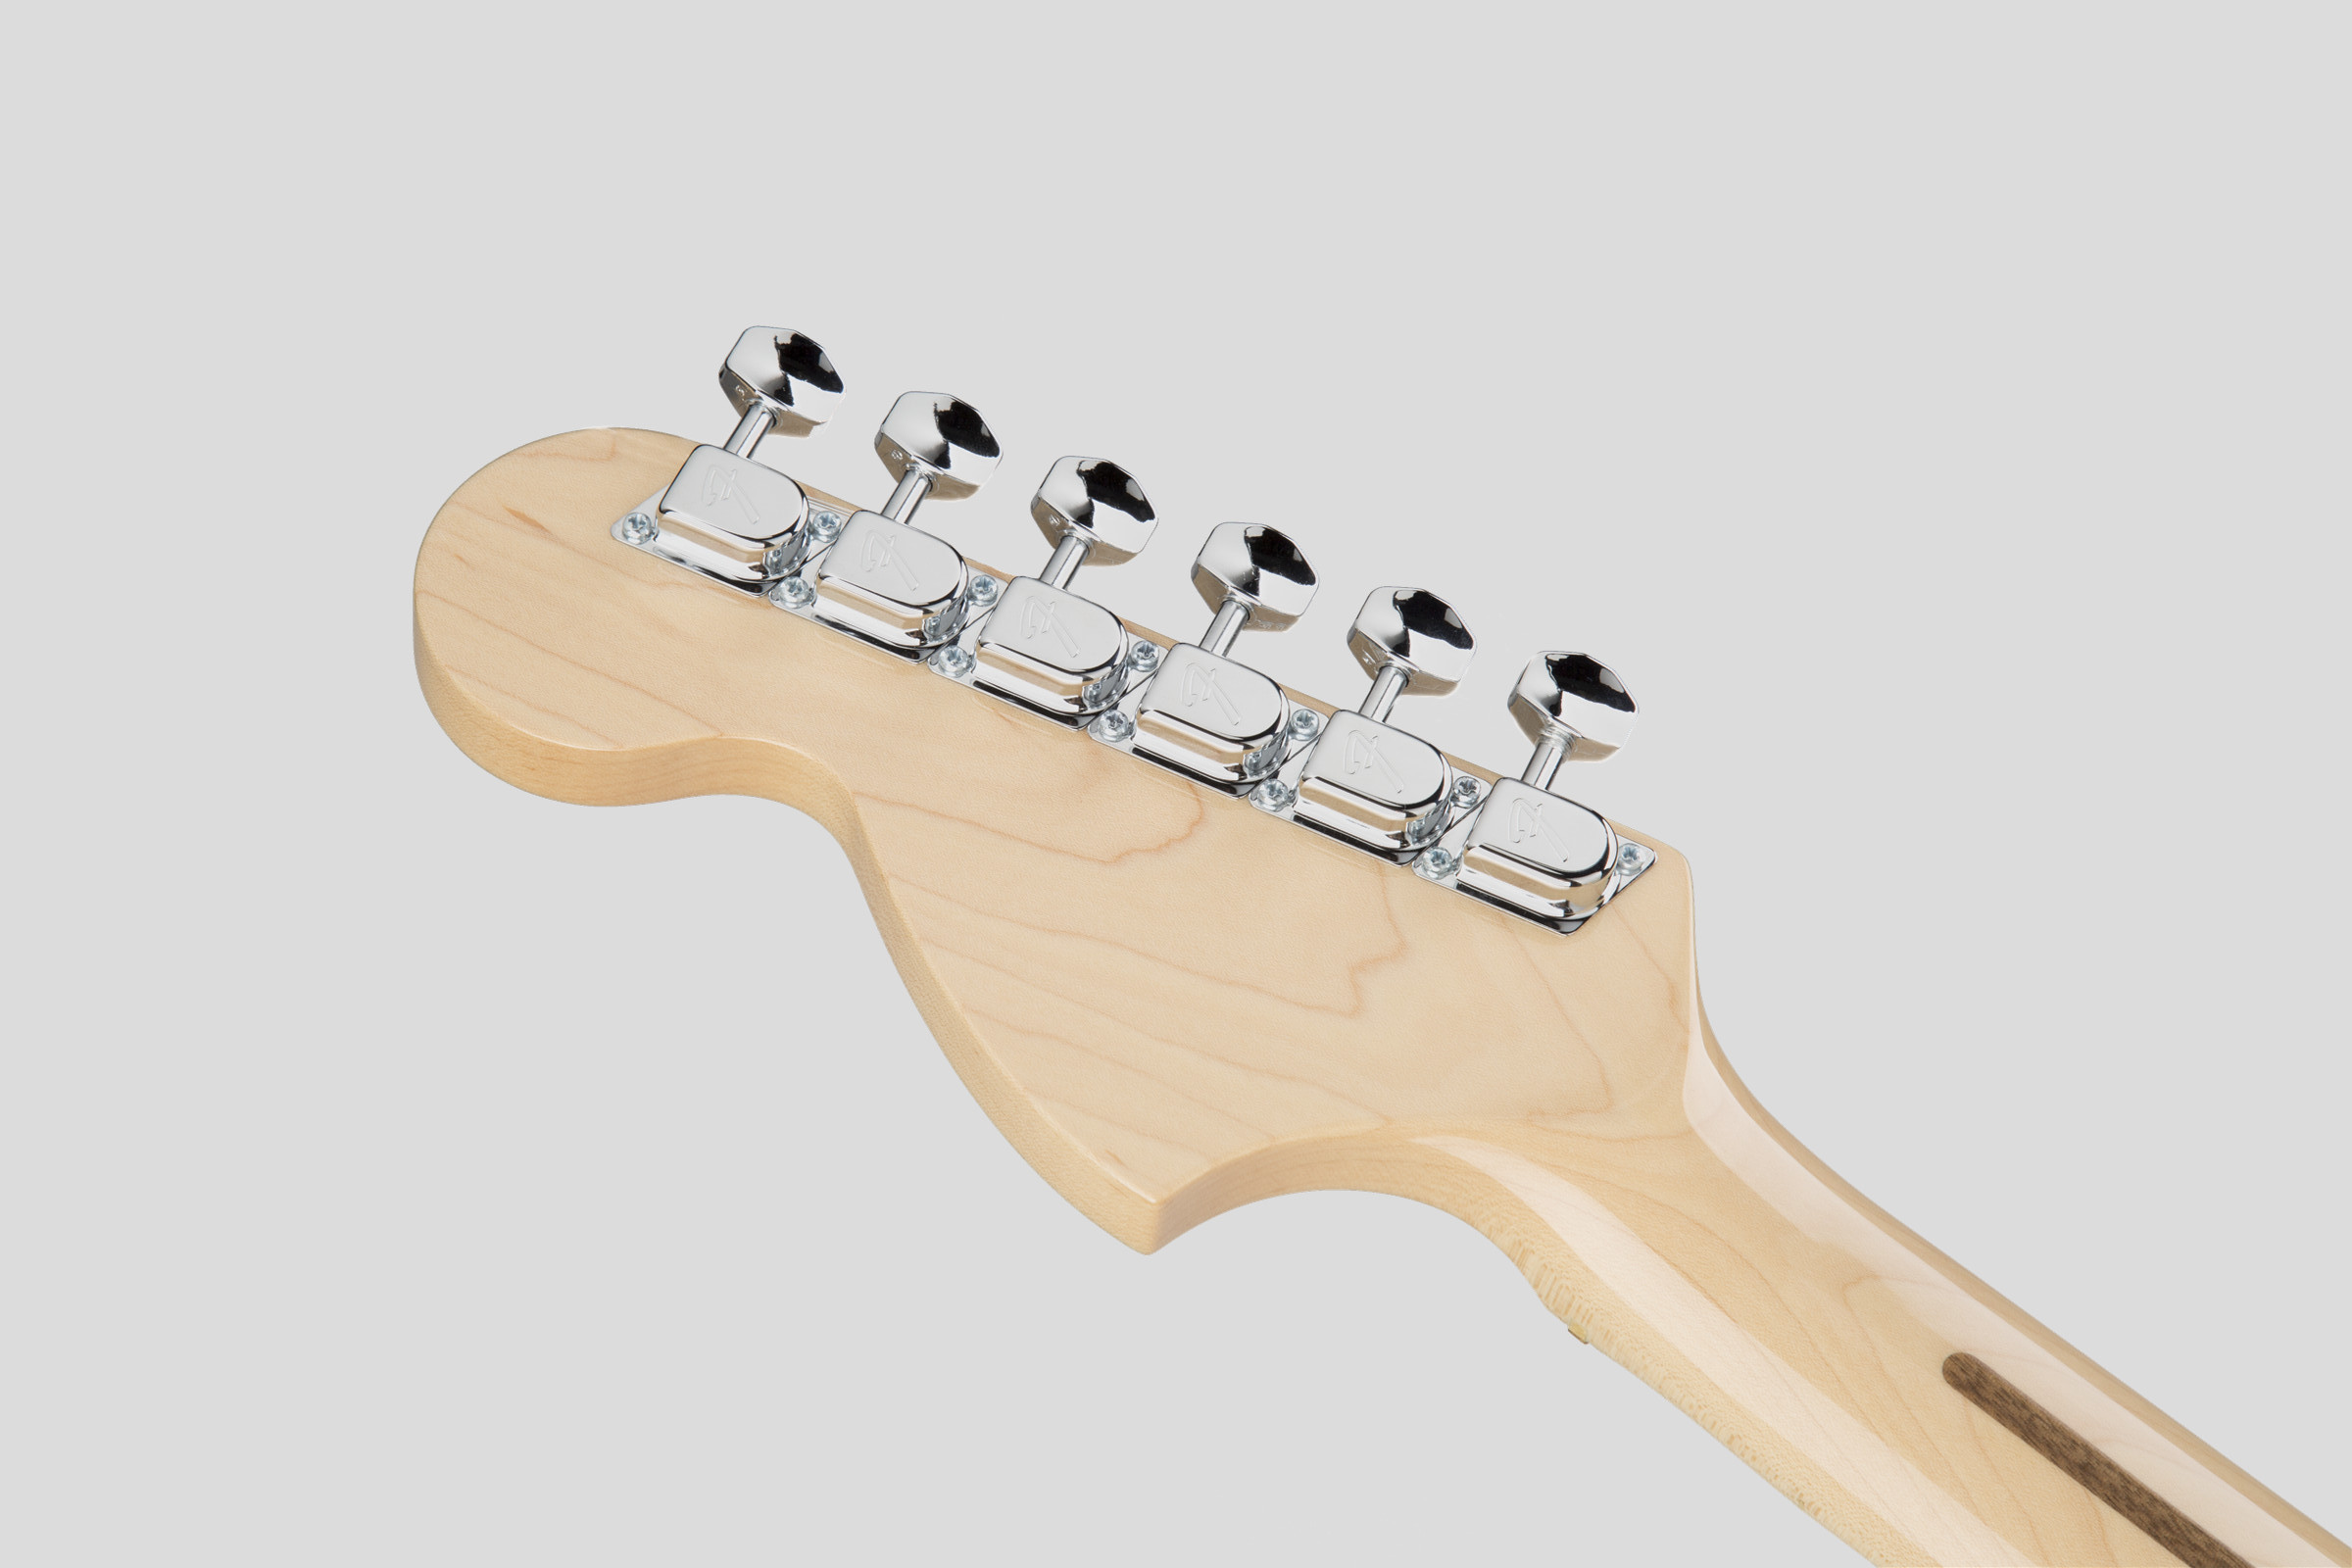 Fender Yngwie Malmsteen Japan Stratocaster Vintage White 6